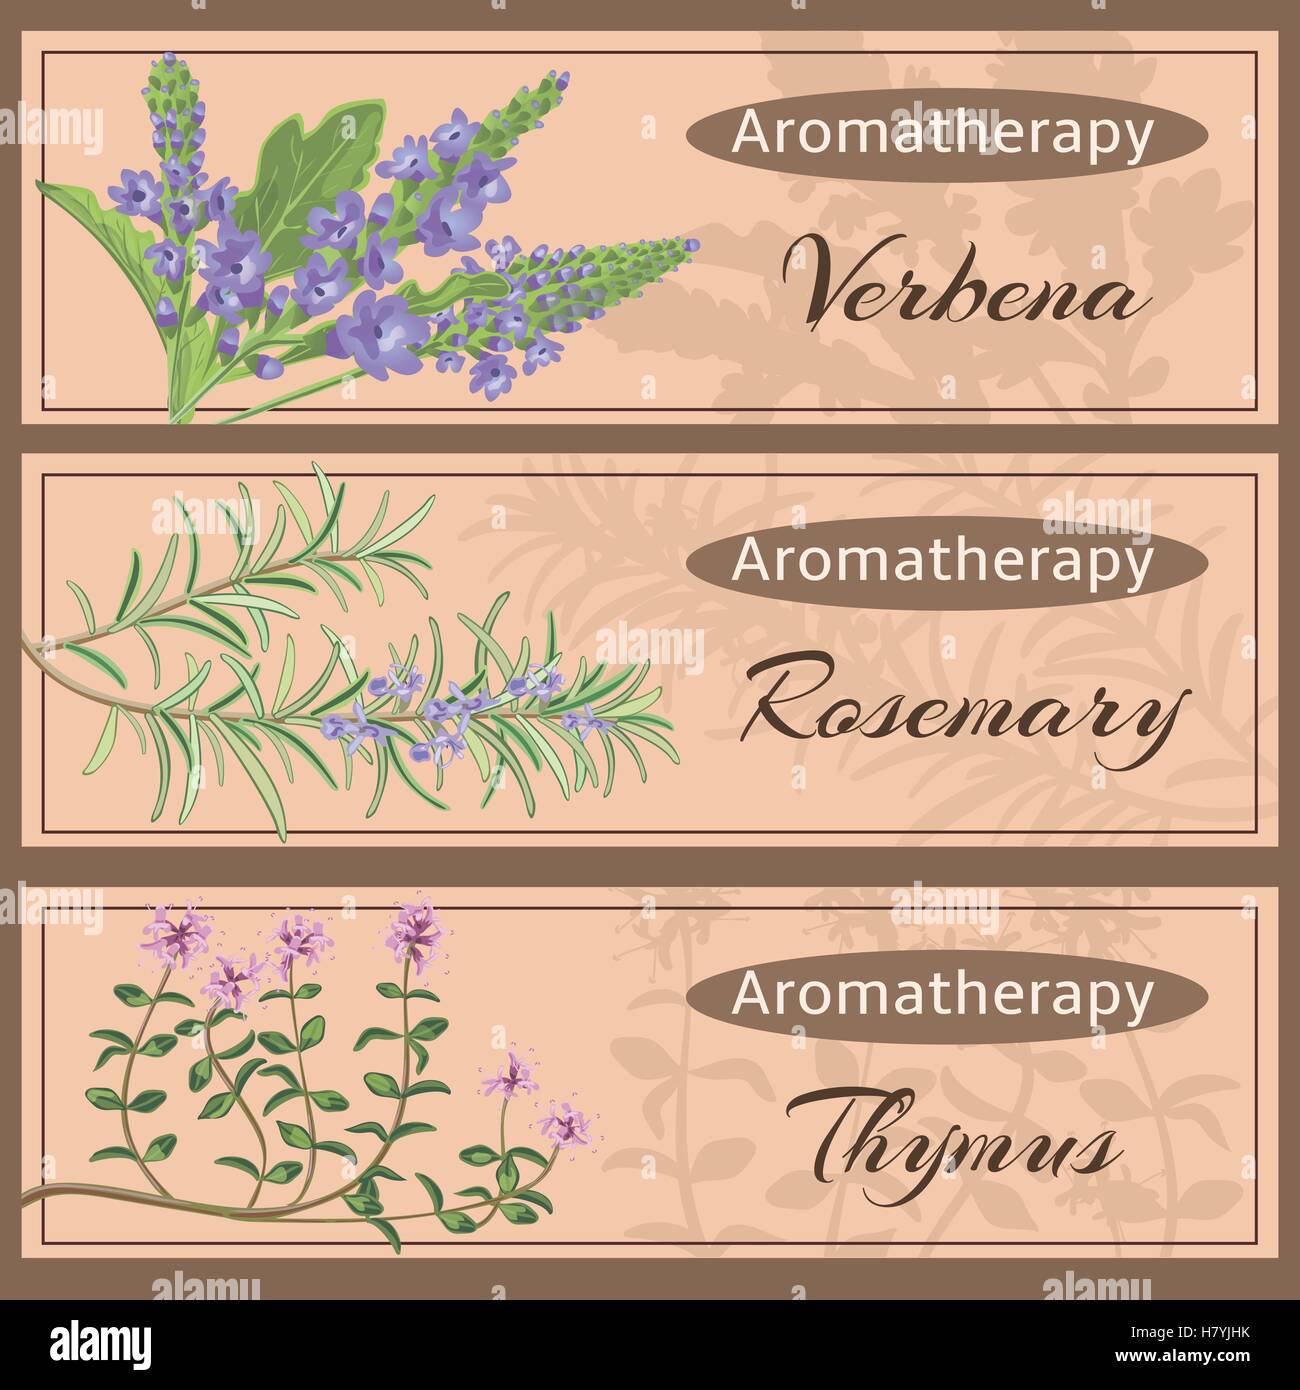 Aromatherapie set Sammlung. Eisenkraut, Rosmarin, Thymus-Banner-Set. Vektor-Illustration EPS 10. Stock Vektor